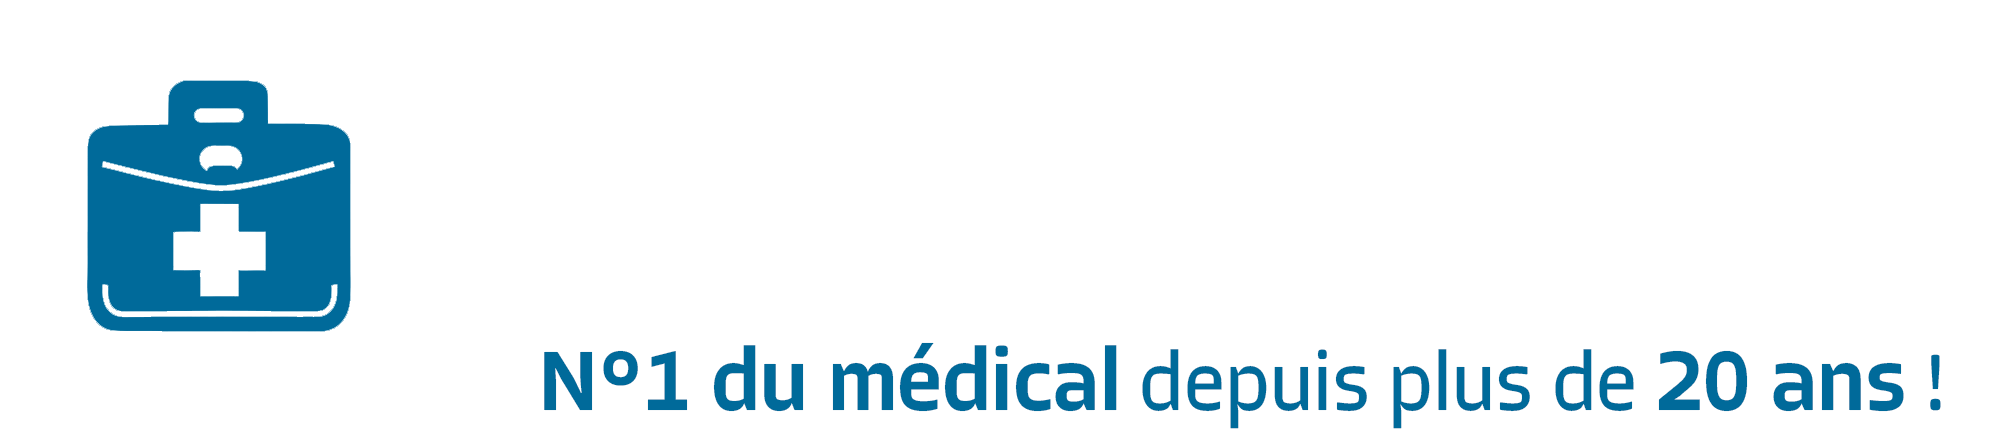 Teamalex-medical